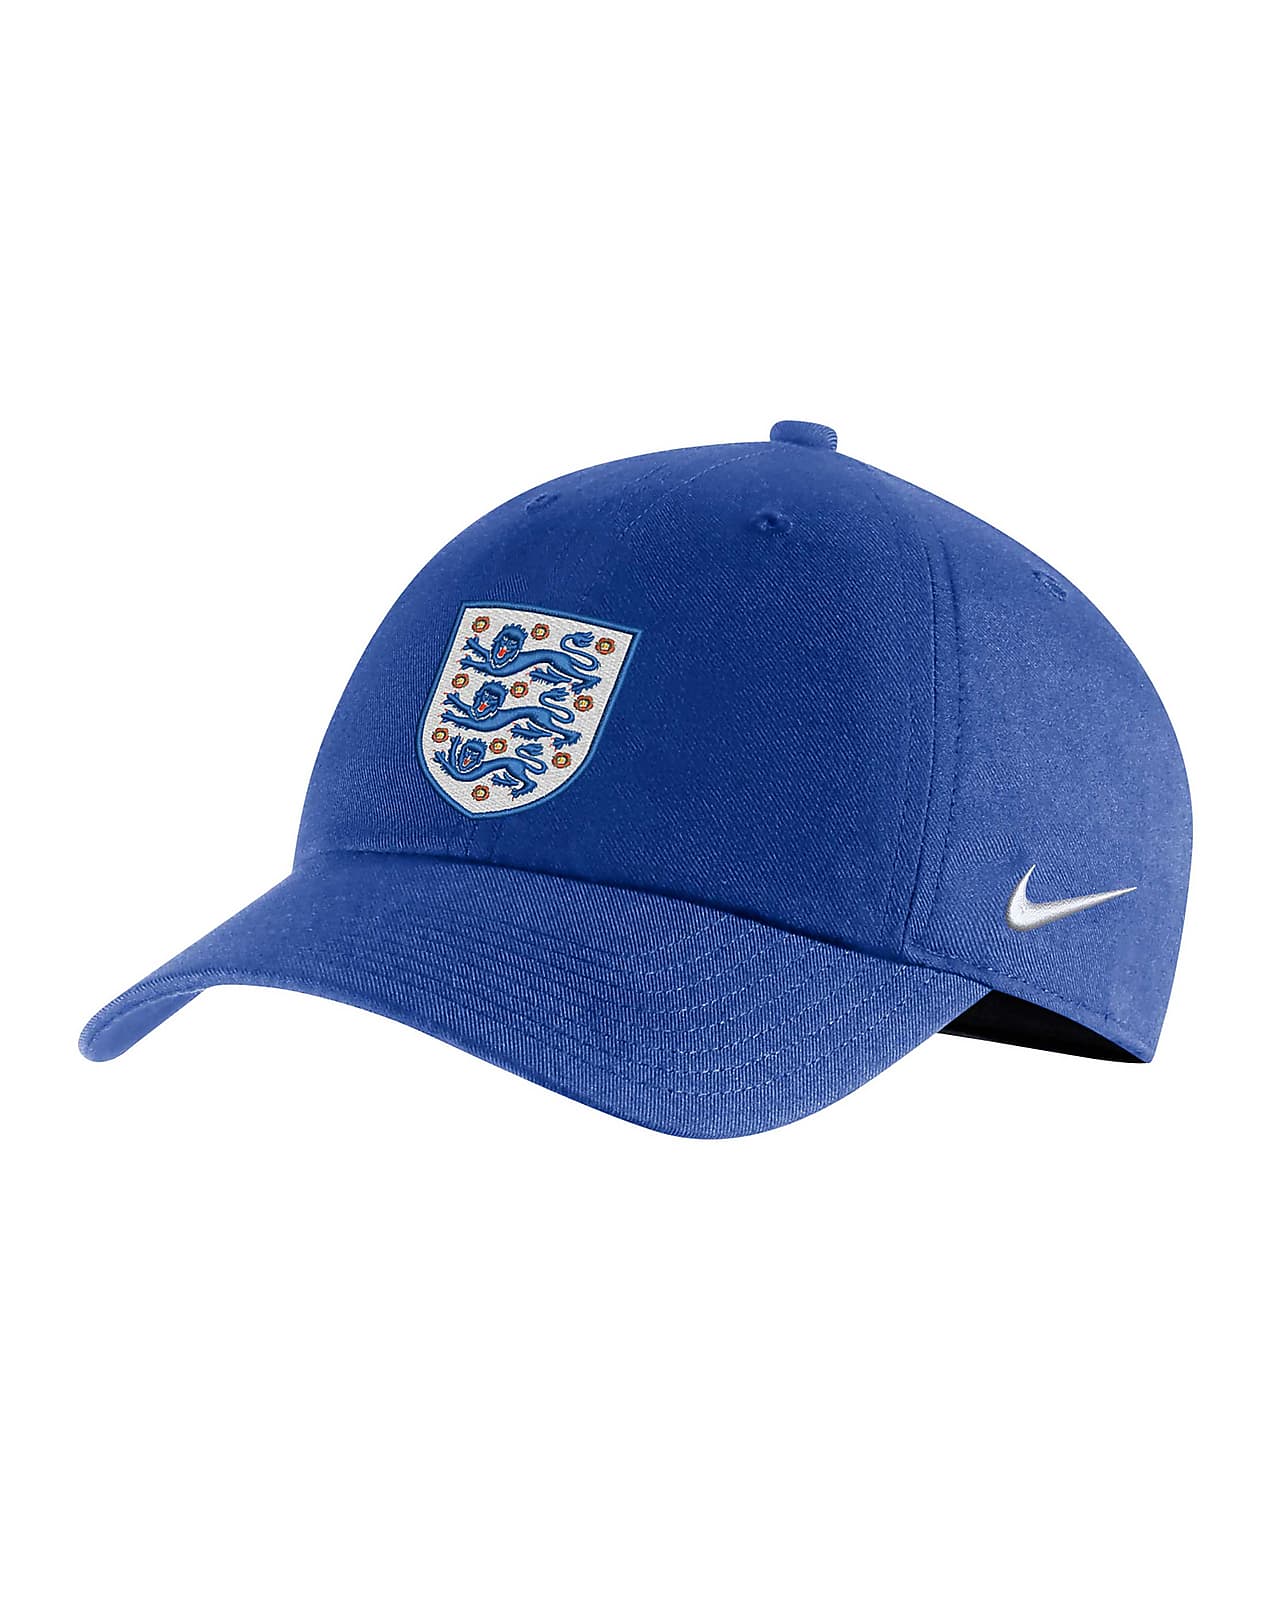 England Heritage86 Men's Adjustable Hat